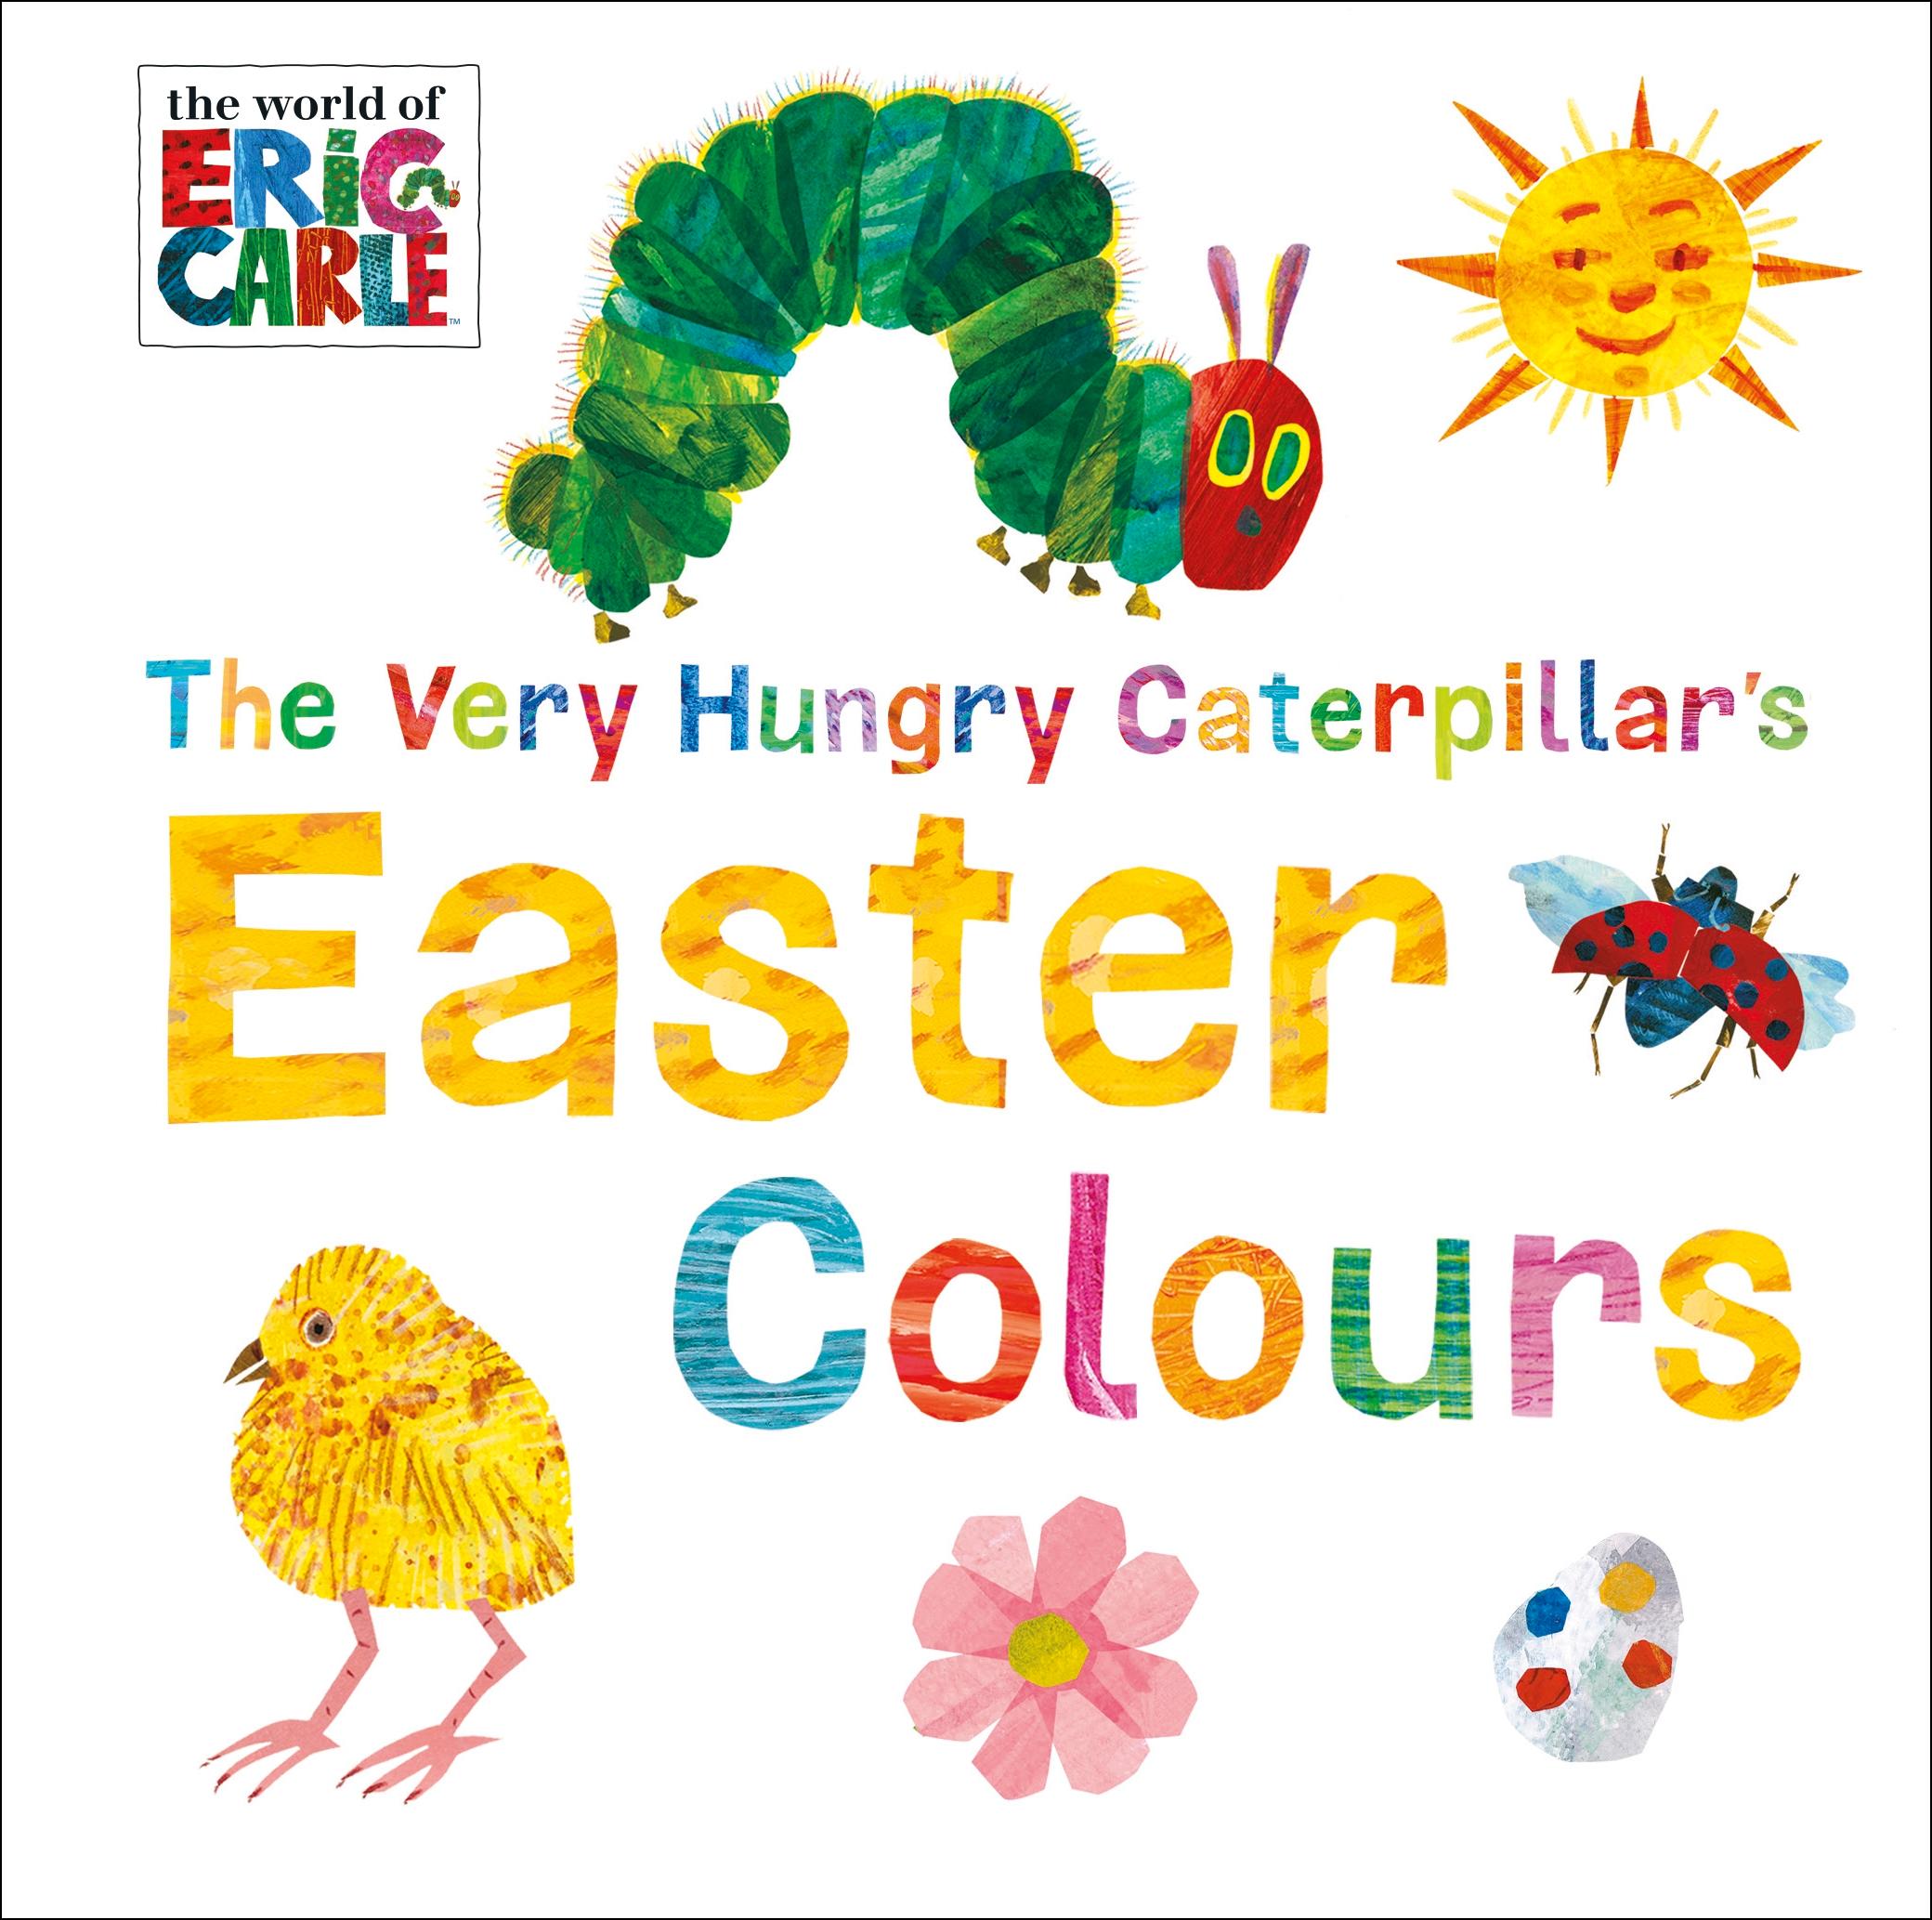 The Very Hungry Caterpillar's Easter Colours / Eric Carle / Buch / Papp-Bilderbuch / Englisch / 2016 / Penguin Random House Children's UK / EAN 9780141363776 - Carle, Eric